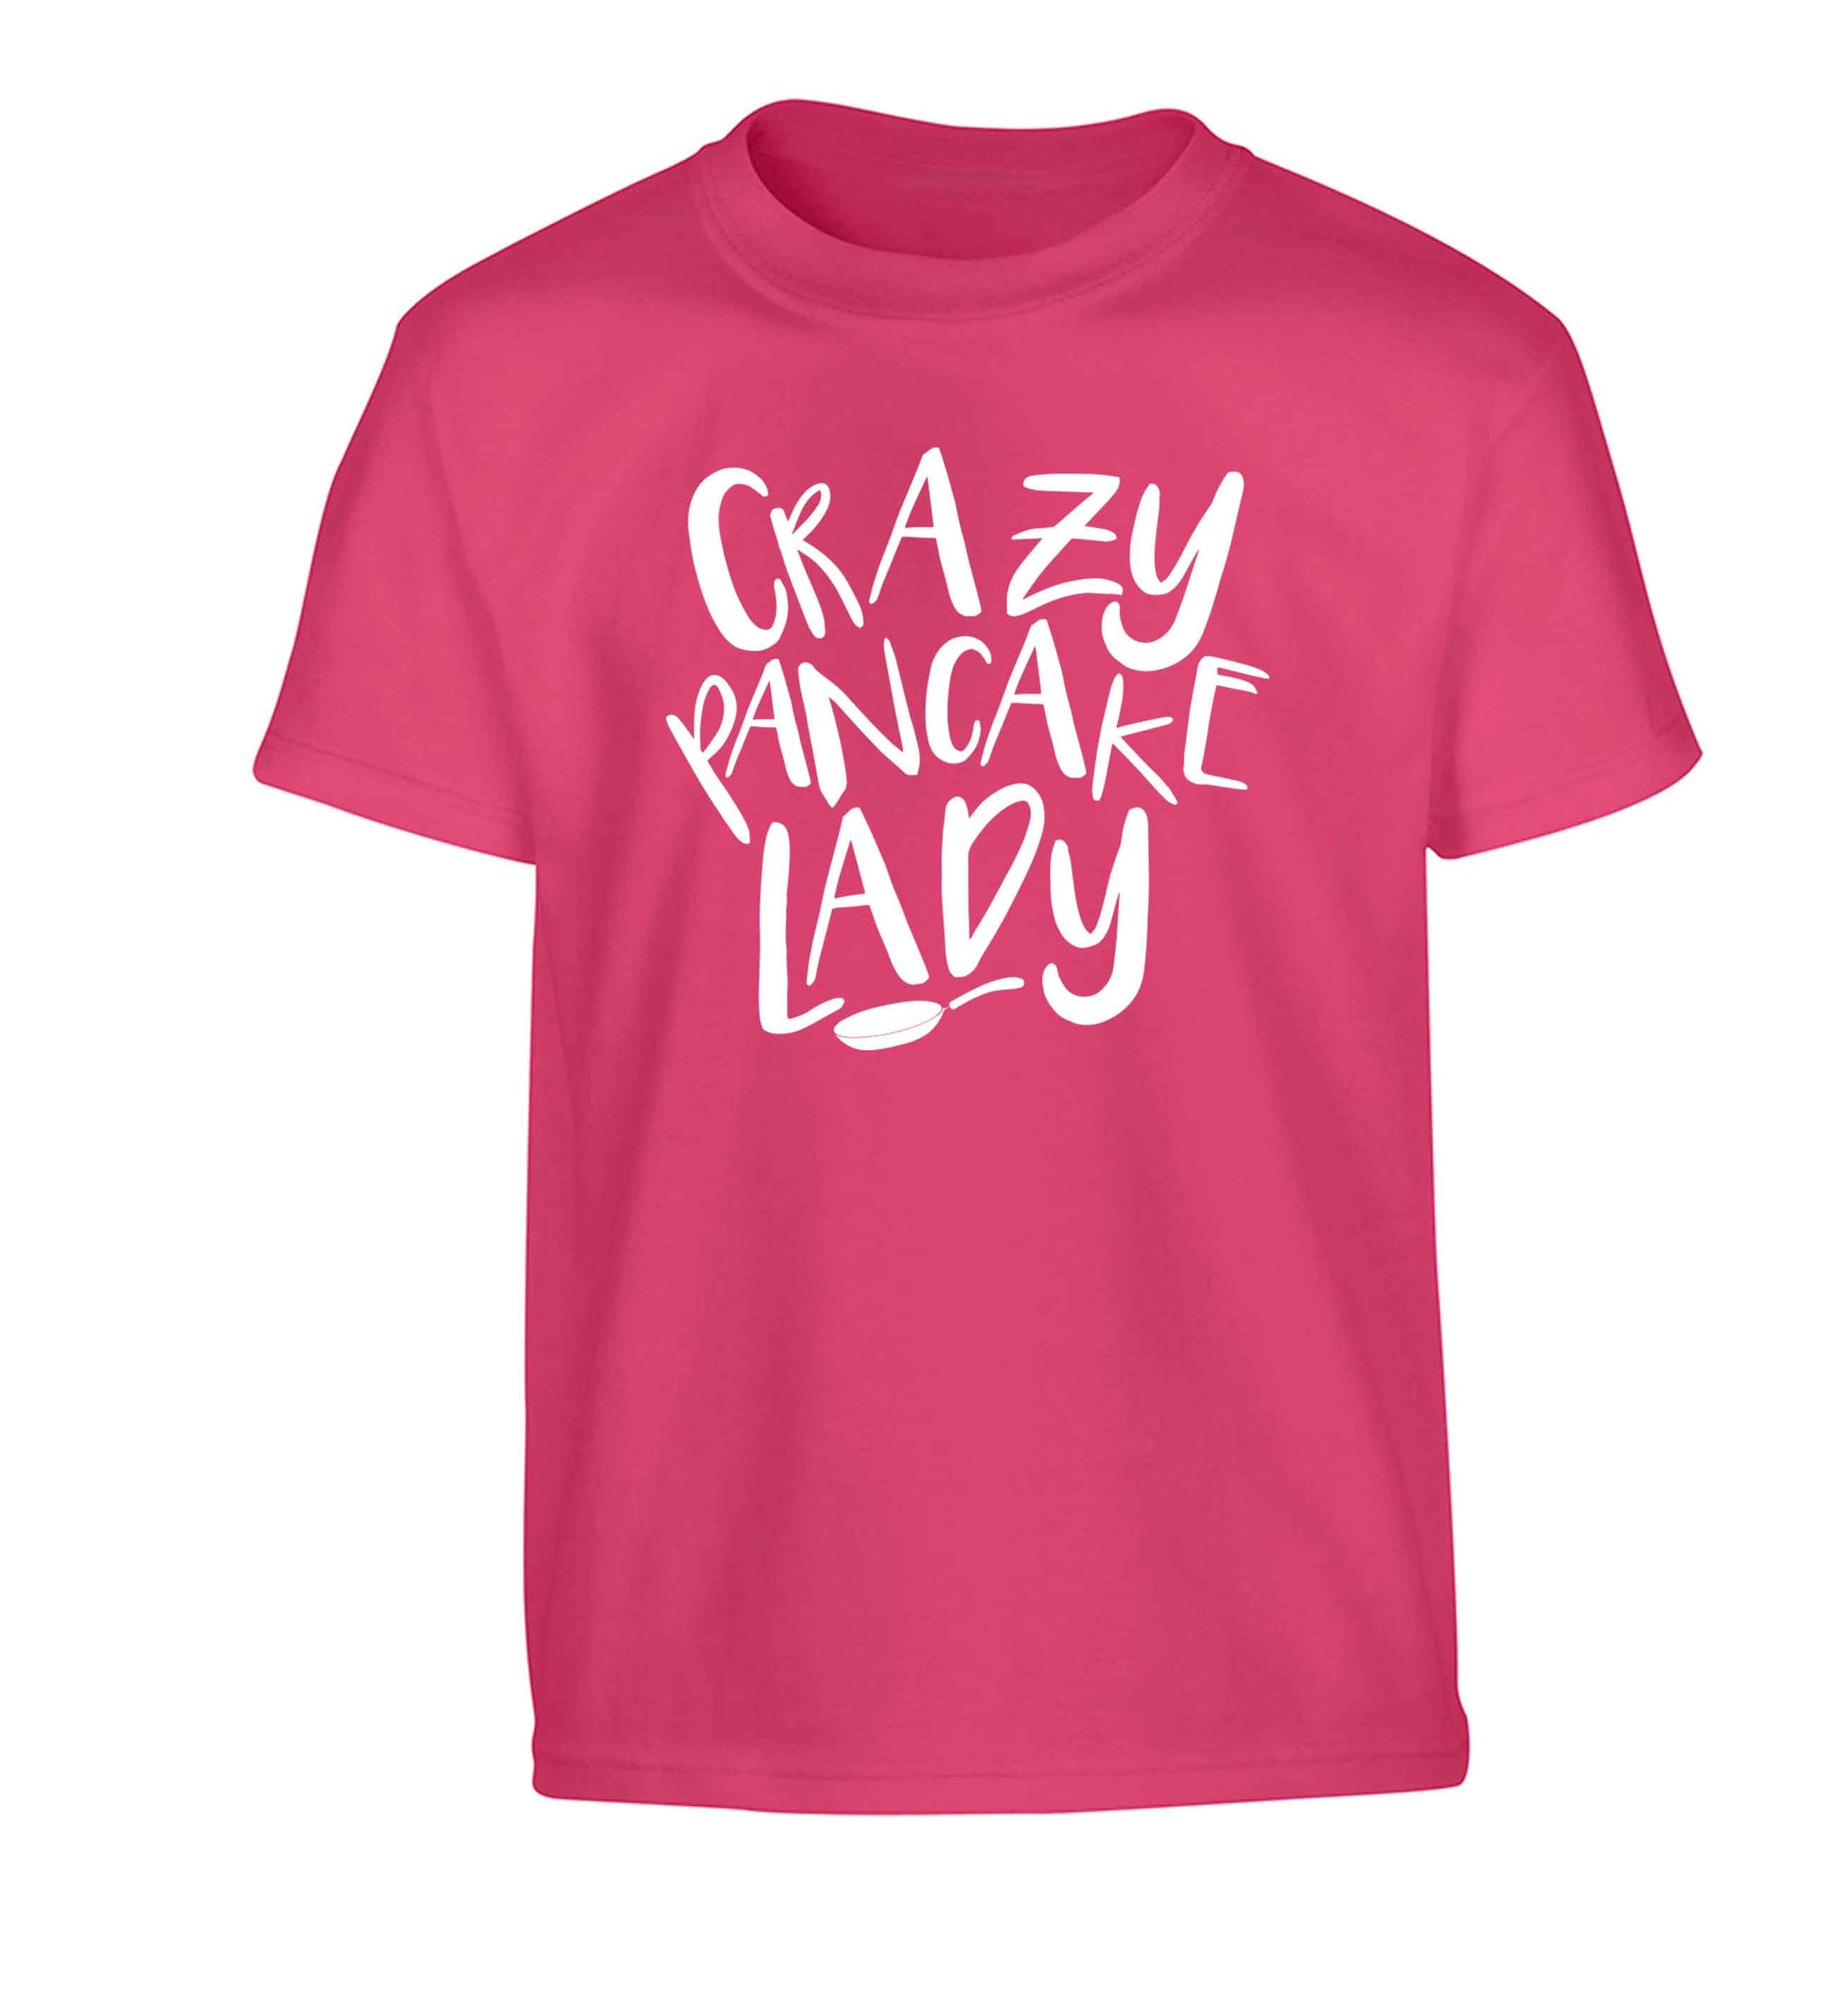 Crazy pancake lady Children's pink Tshirt 12-13 Years